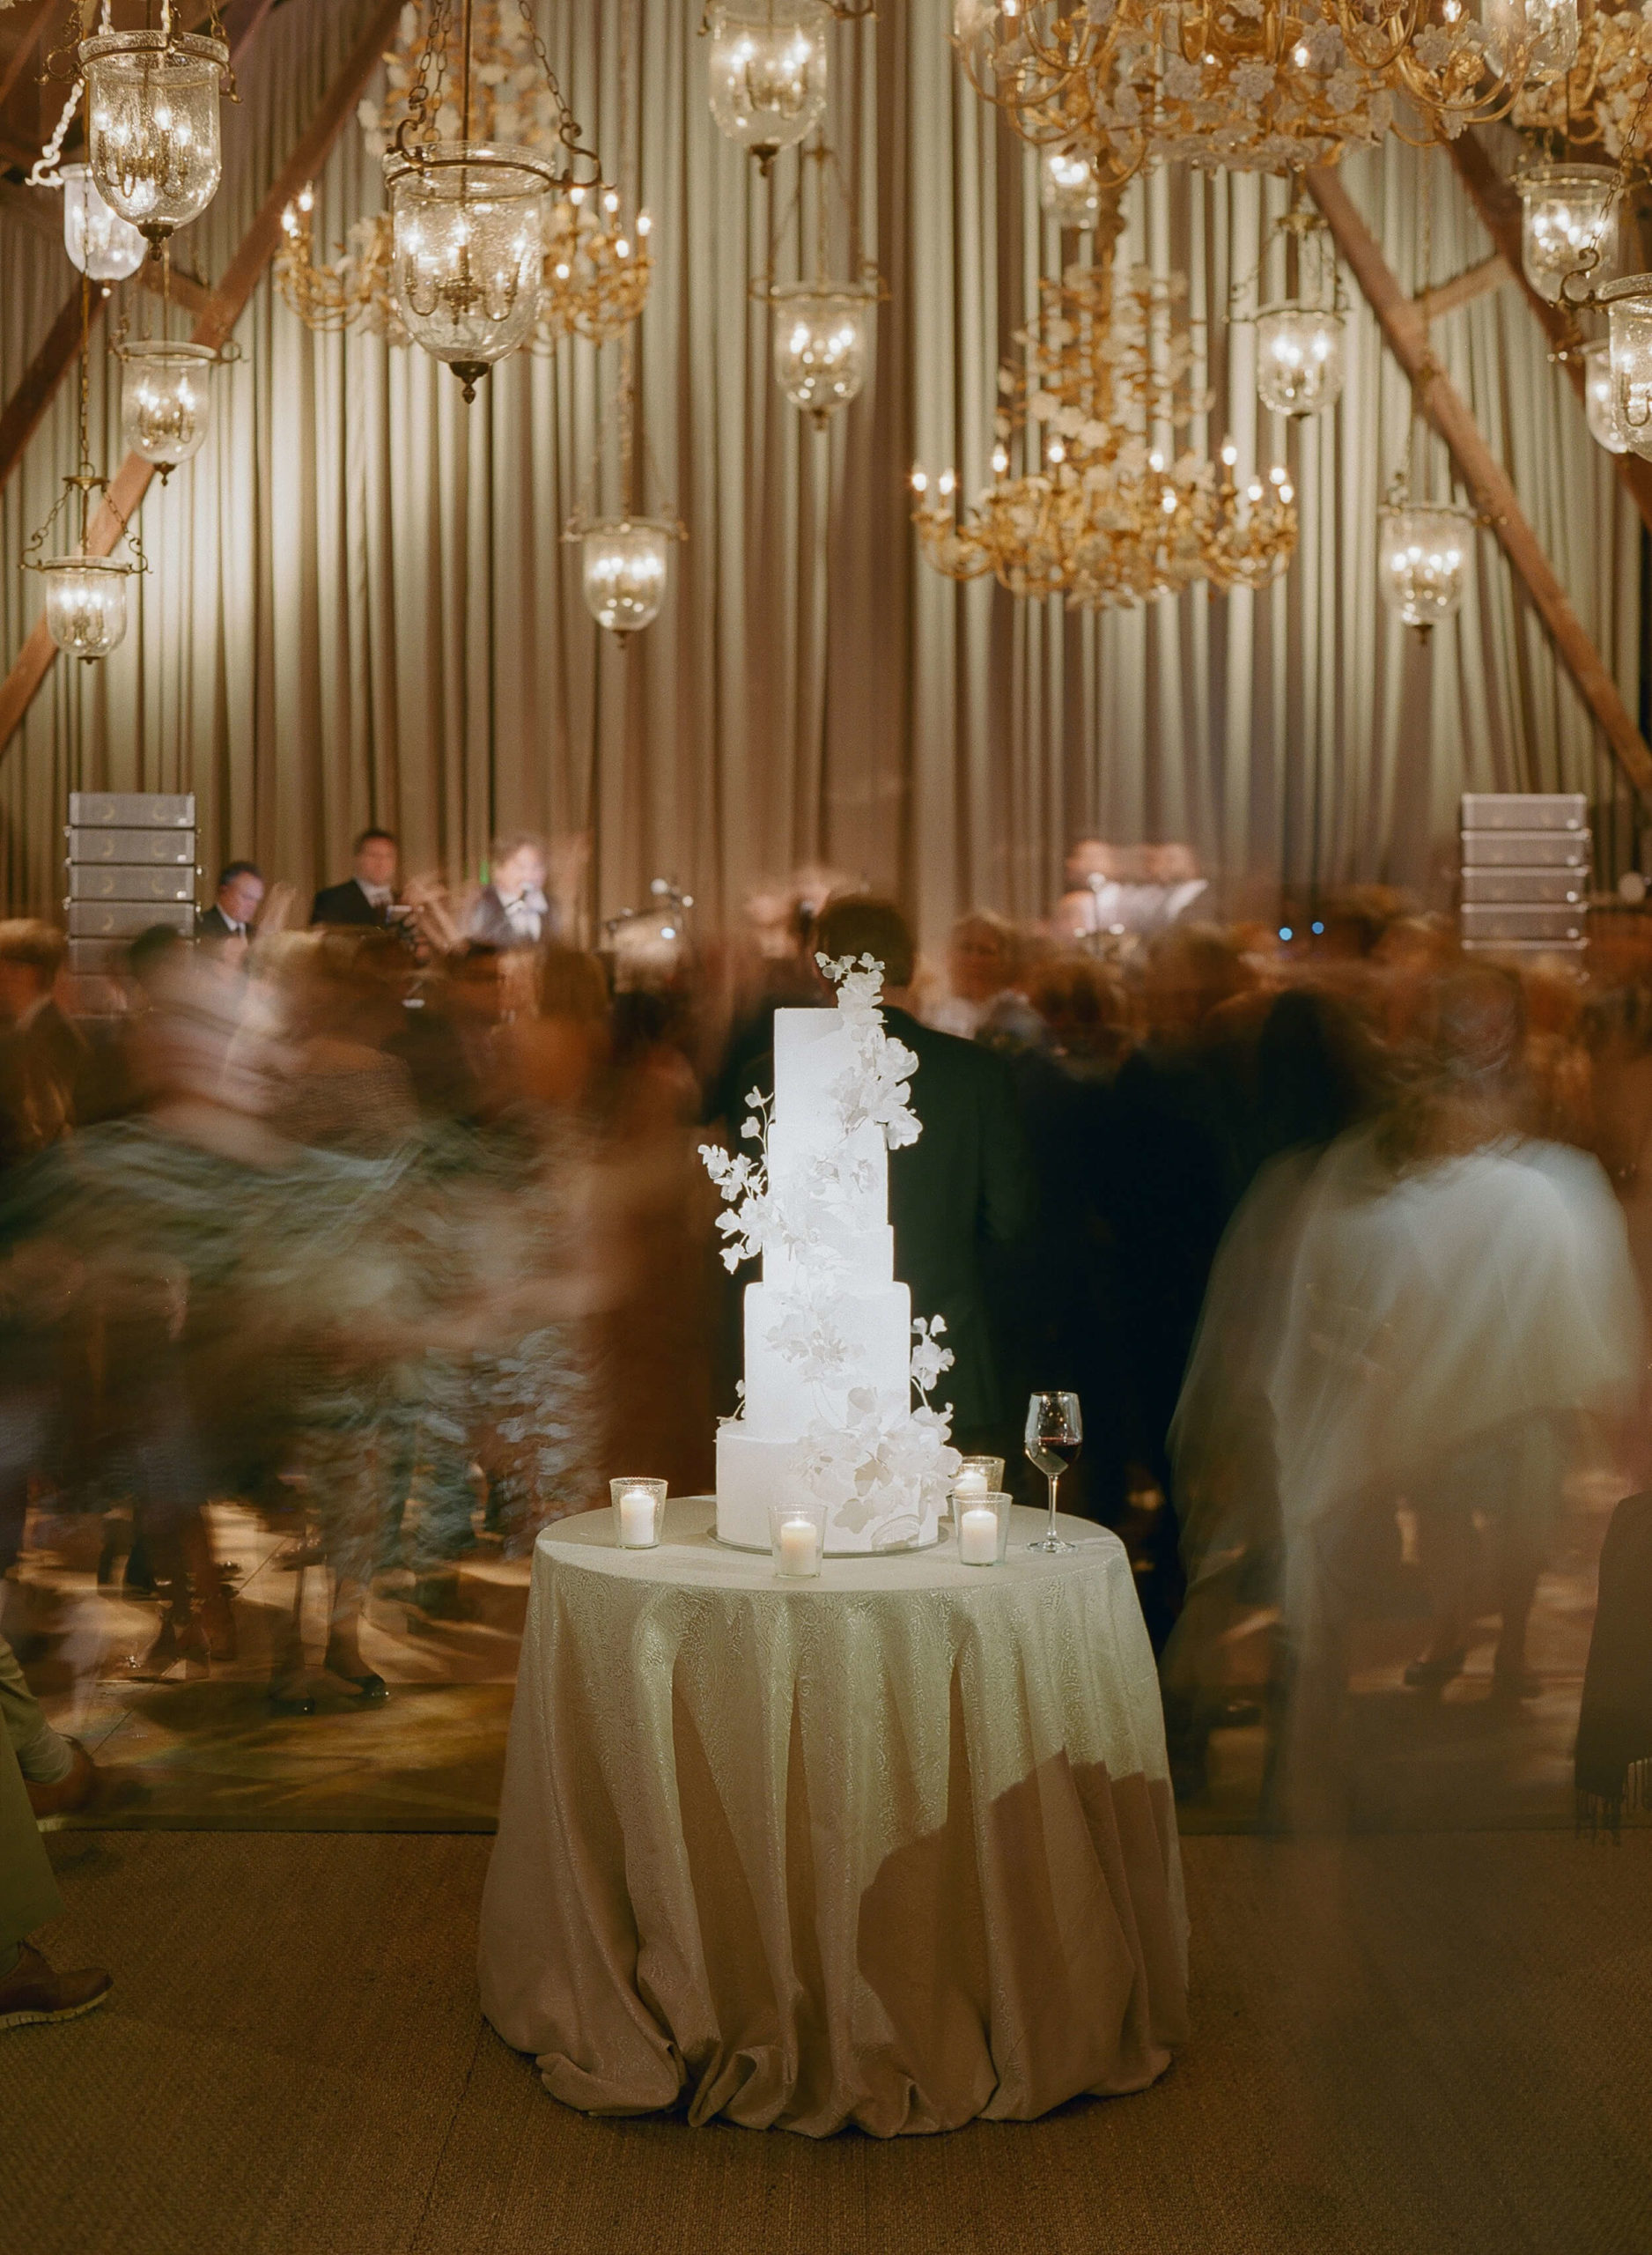 white wedding cake at reception